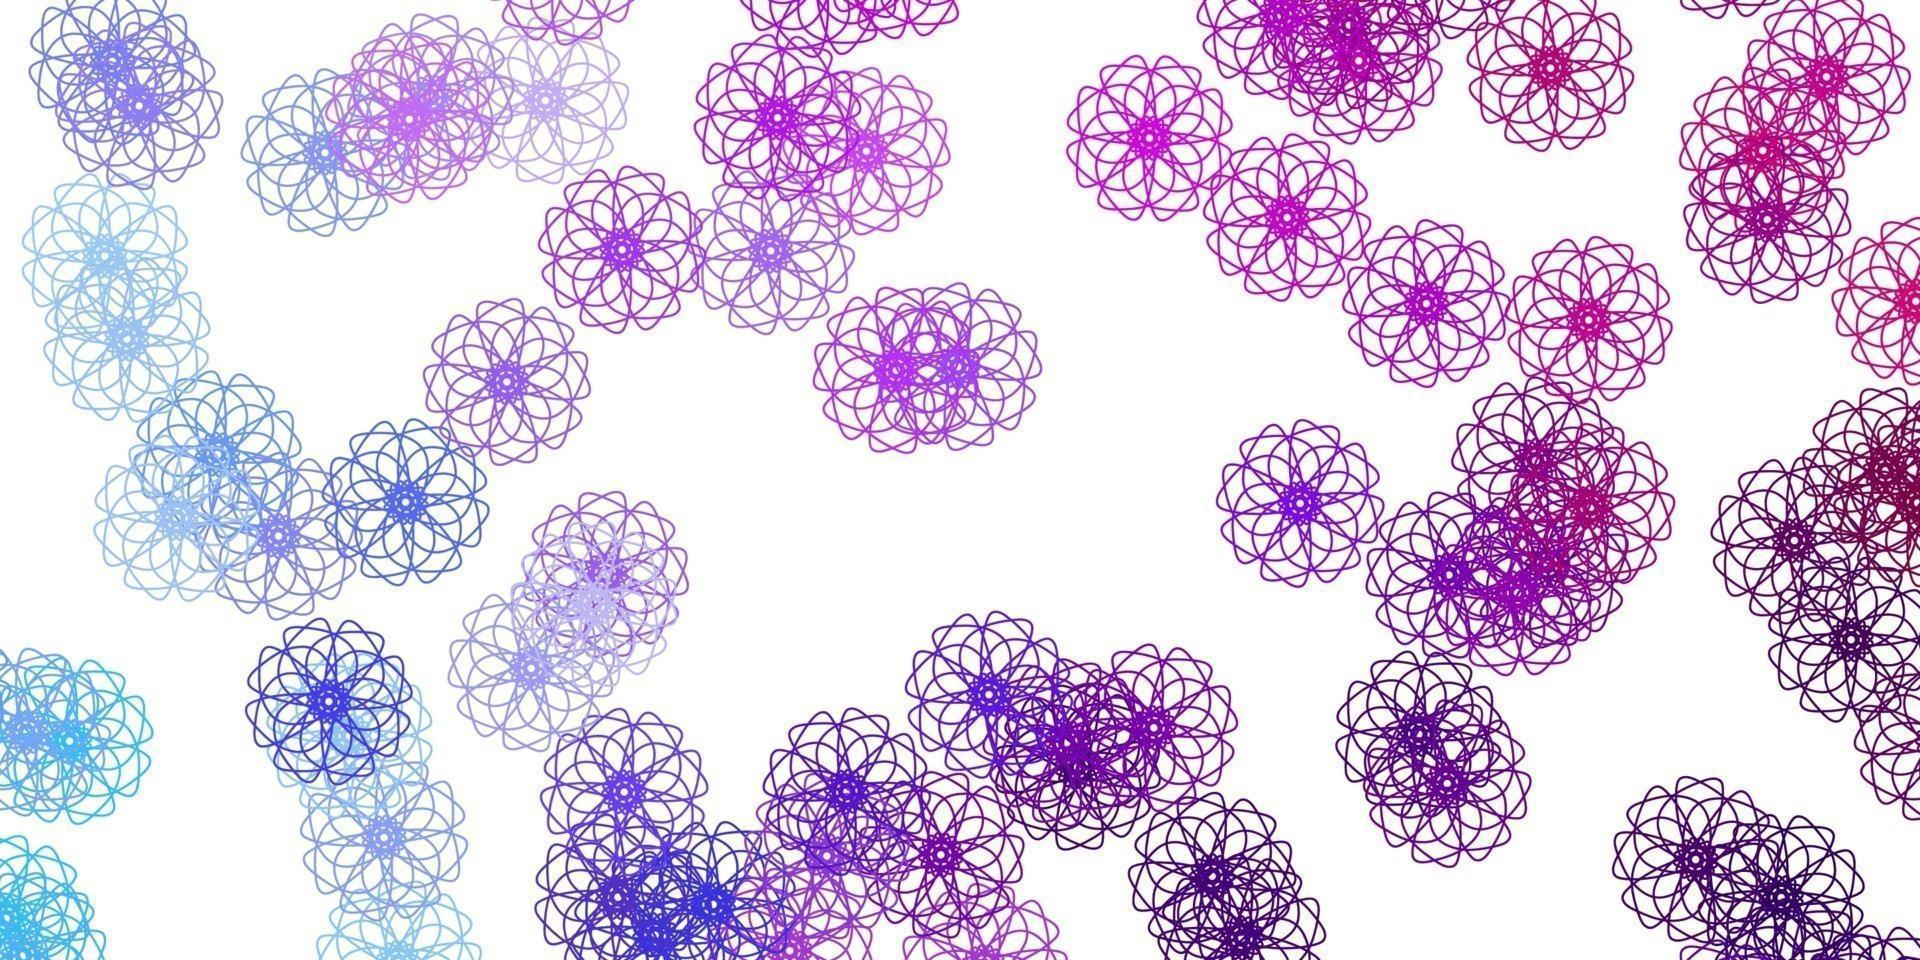 hellblaue, rote Vektor-Gekritzel-Textur mit Blumen. vektor